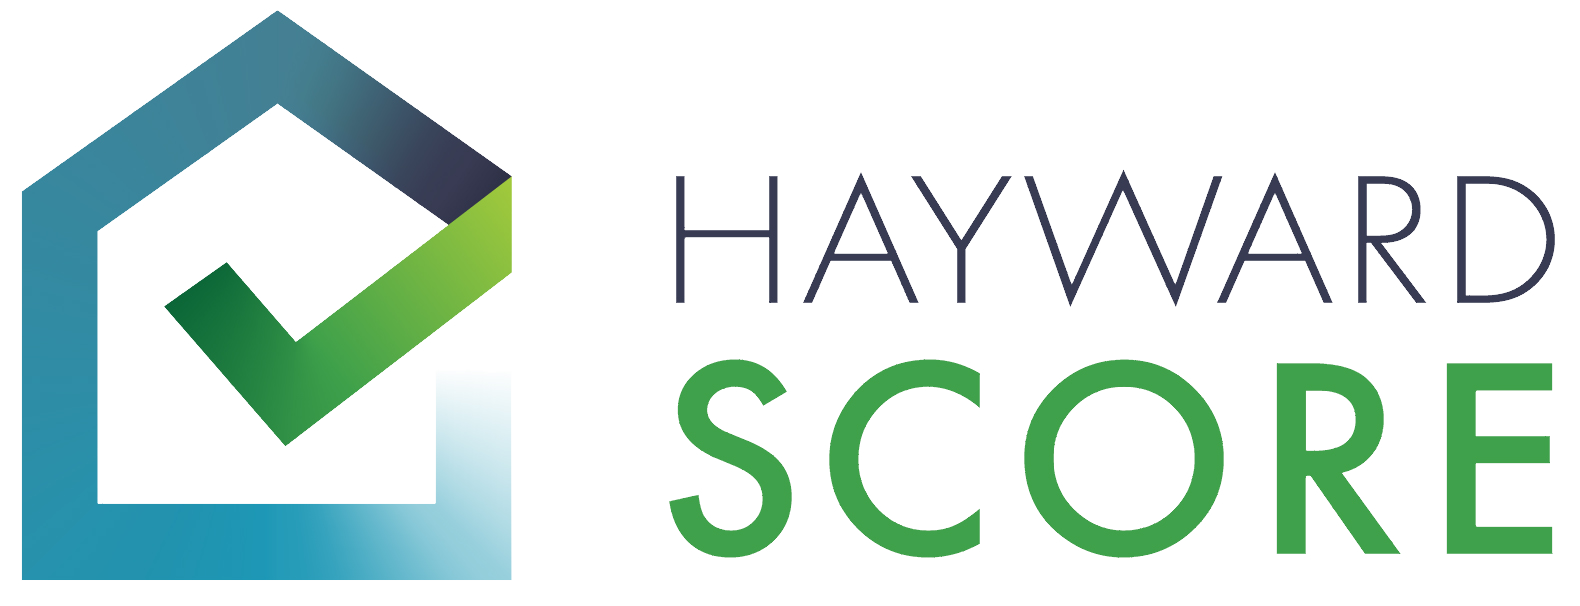 Hayward Score